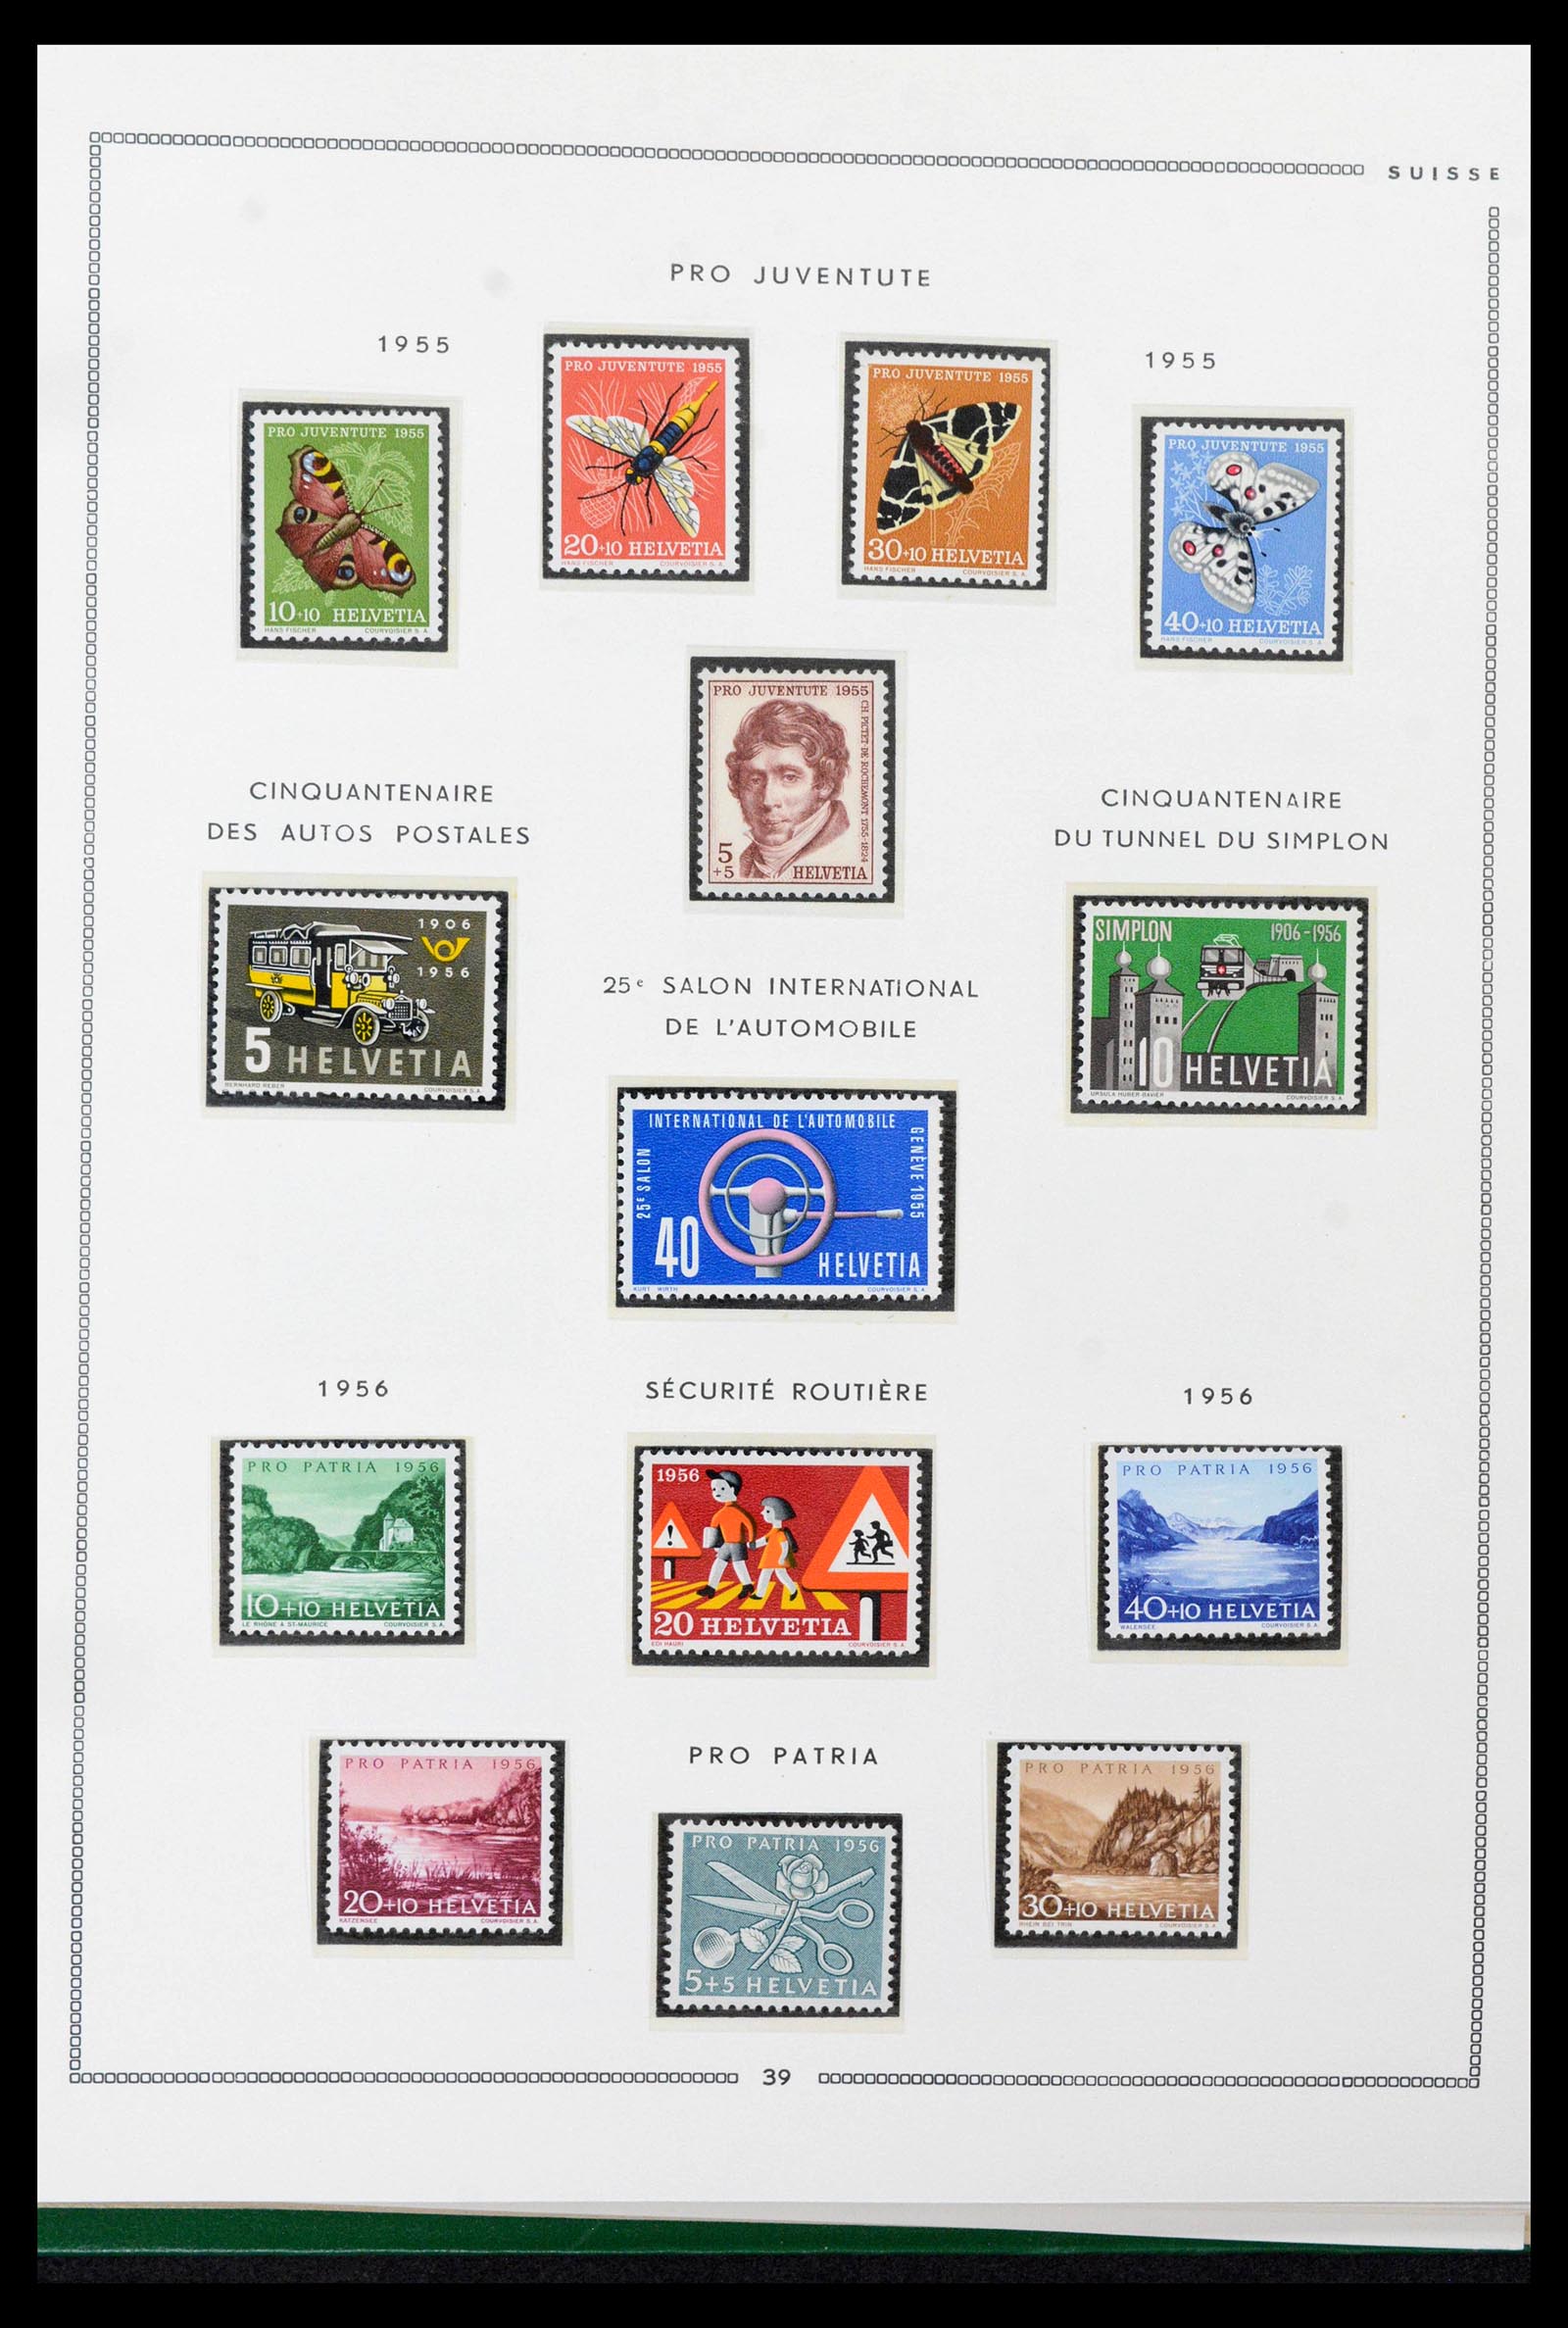 39096 0034 - Stamp collection 39096 Switzerland 1907-1963.